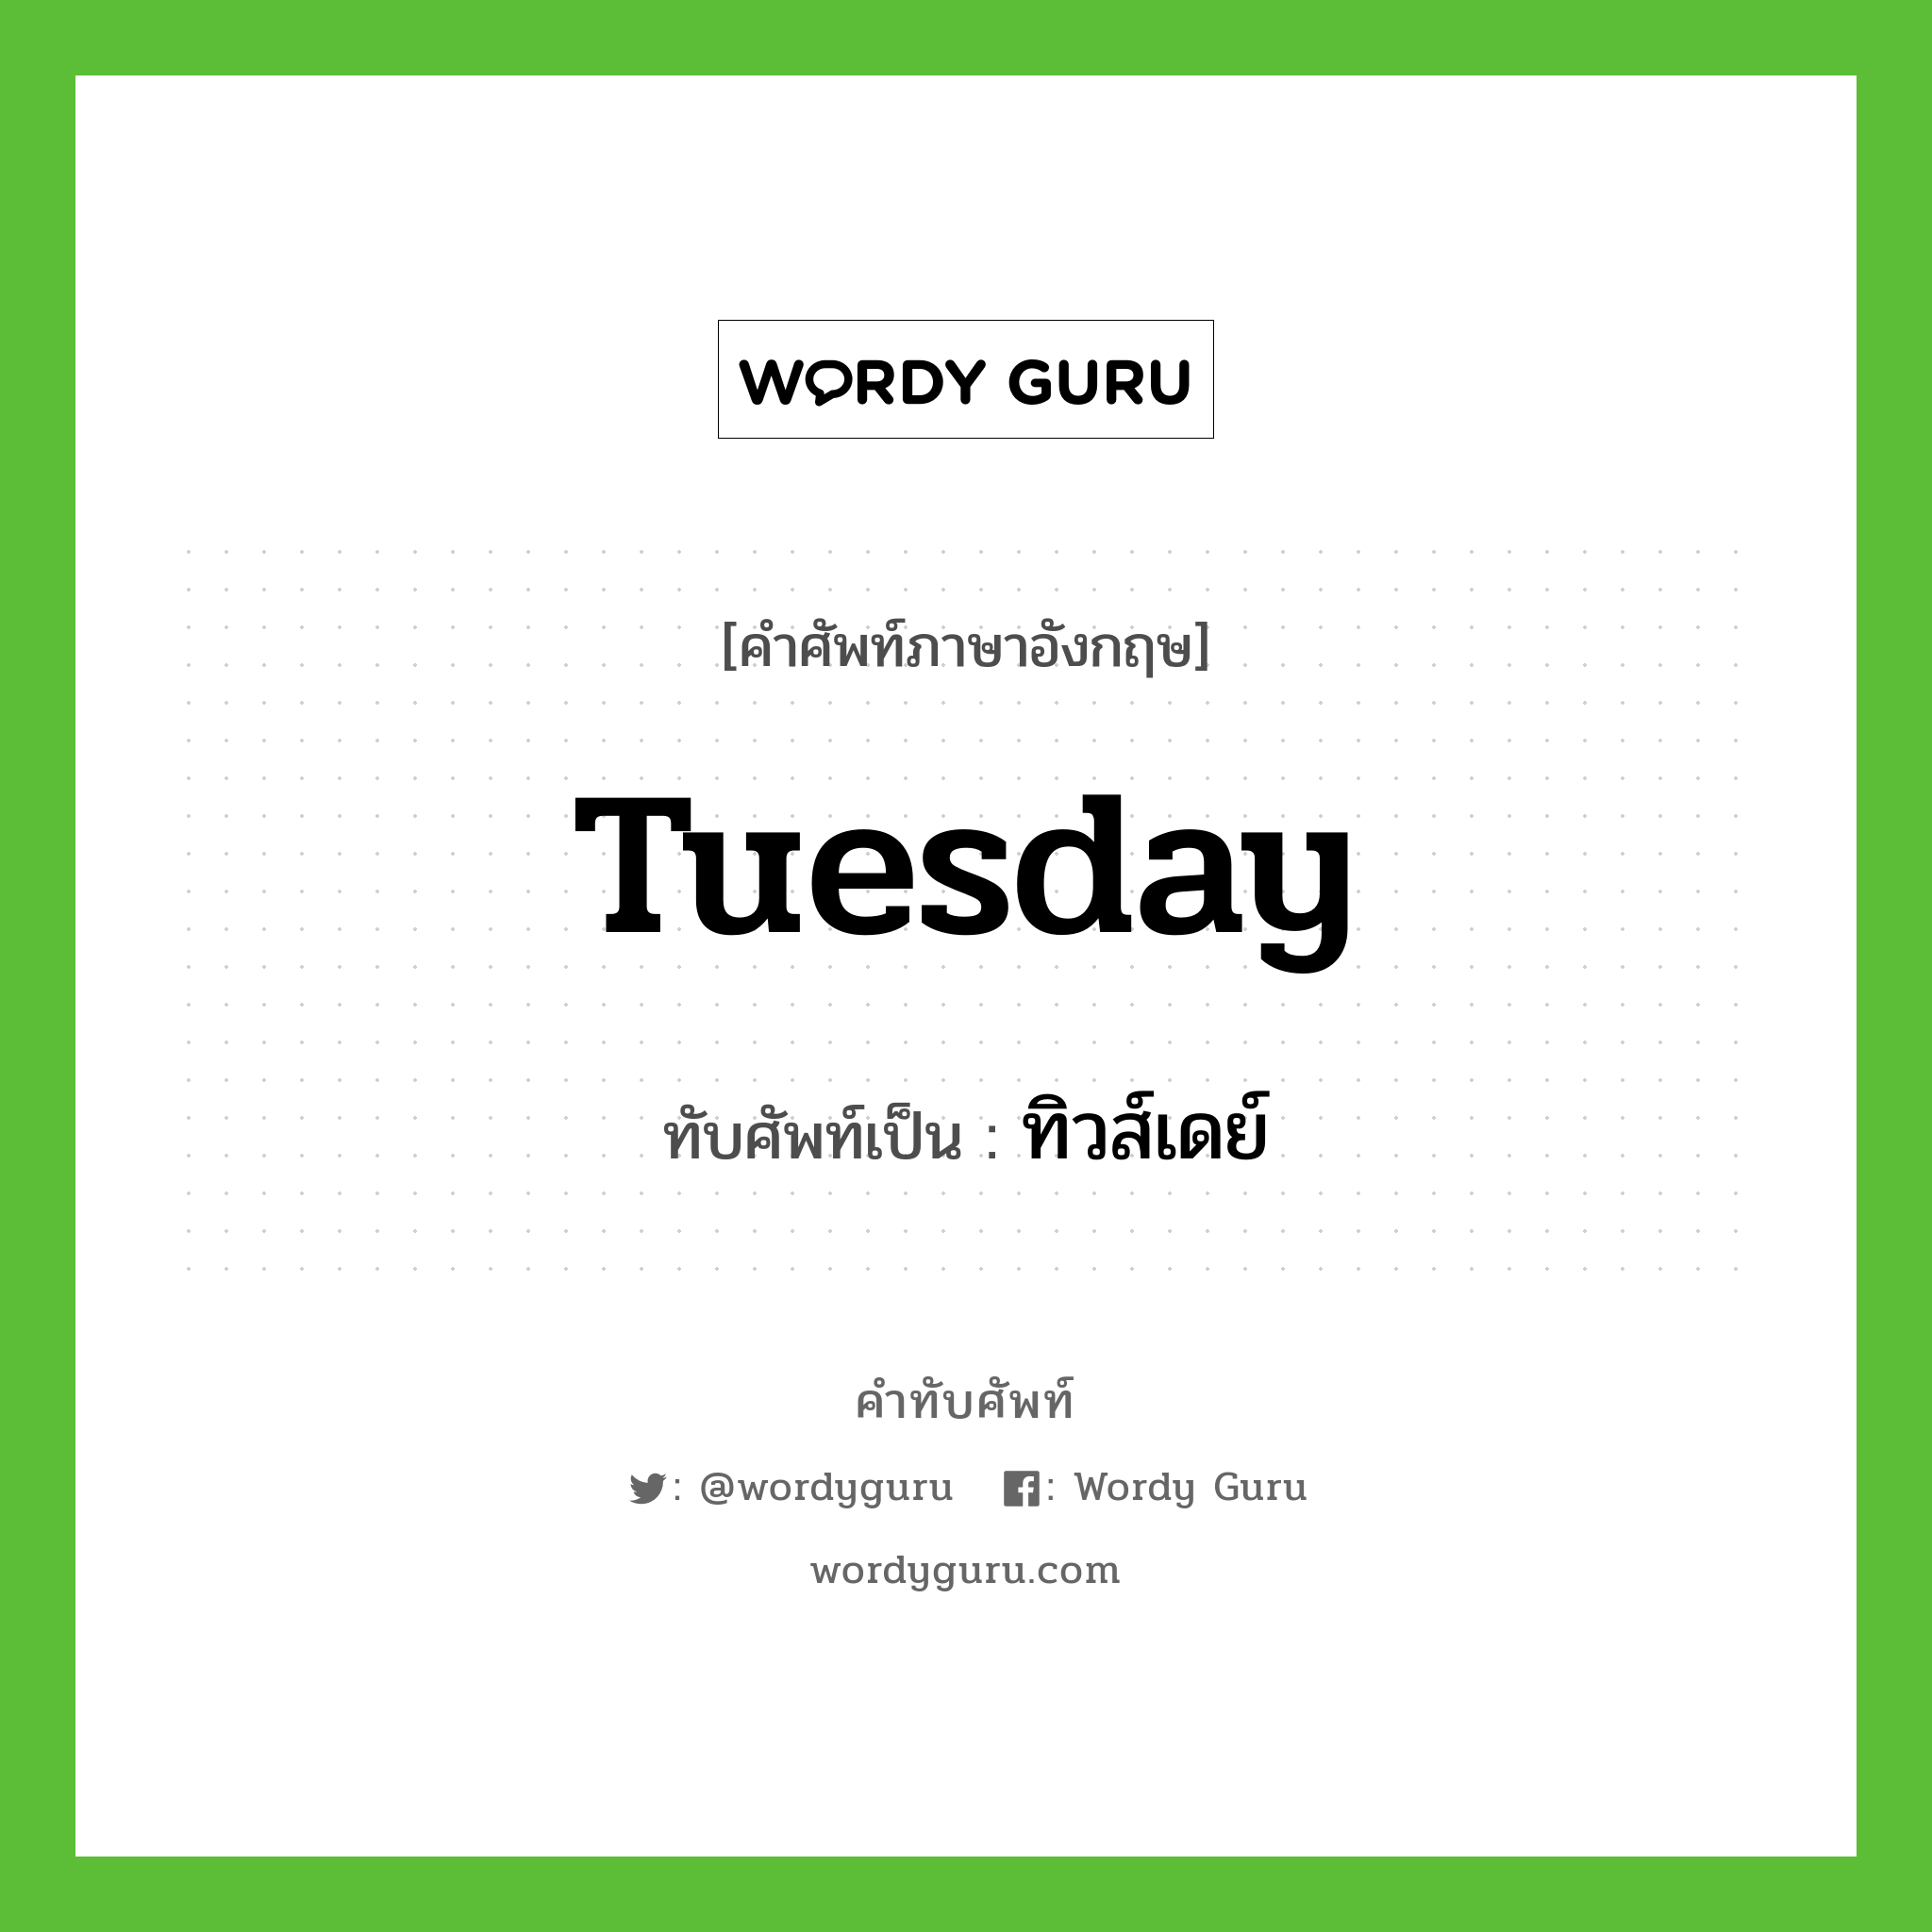 Tuesday เขียนเป็นคำไทยว่าอะไร?, คำศัพท์ภาษาอังกฤษ Tuesday ทับศัพท์เป็น ทิวส์เดย์